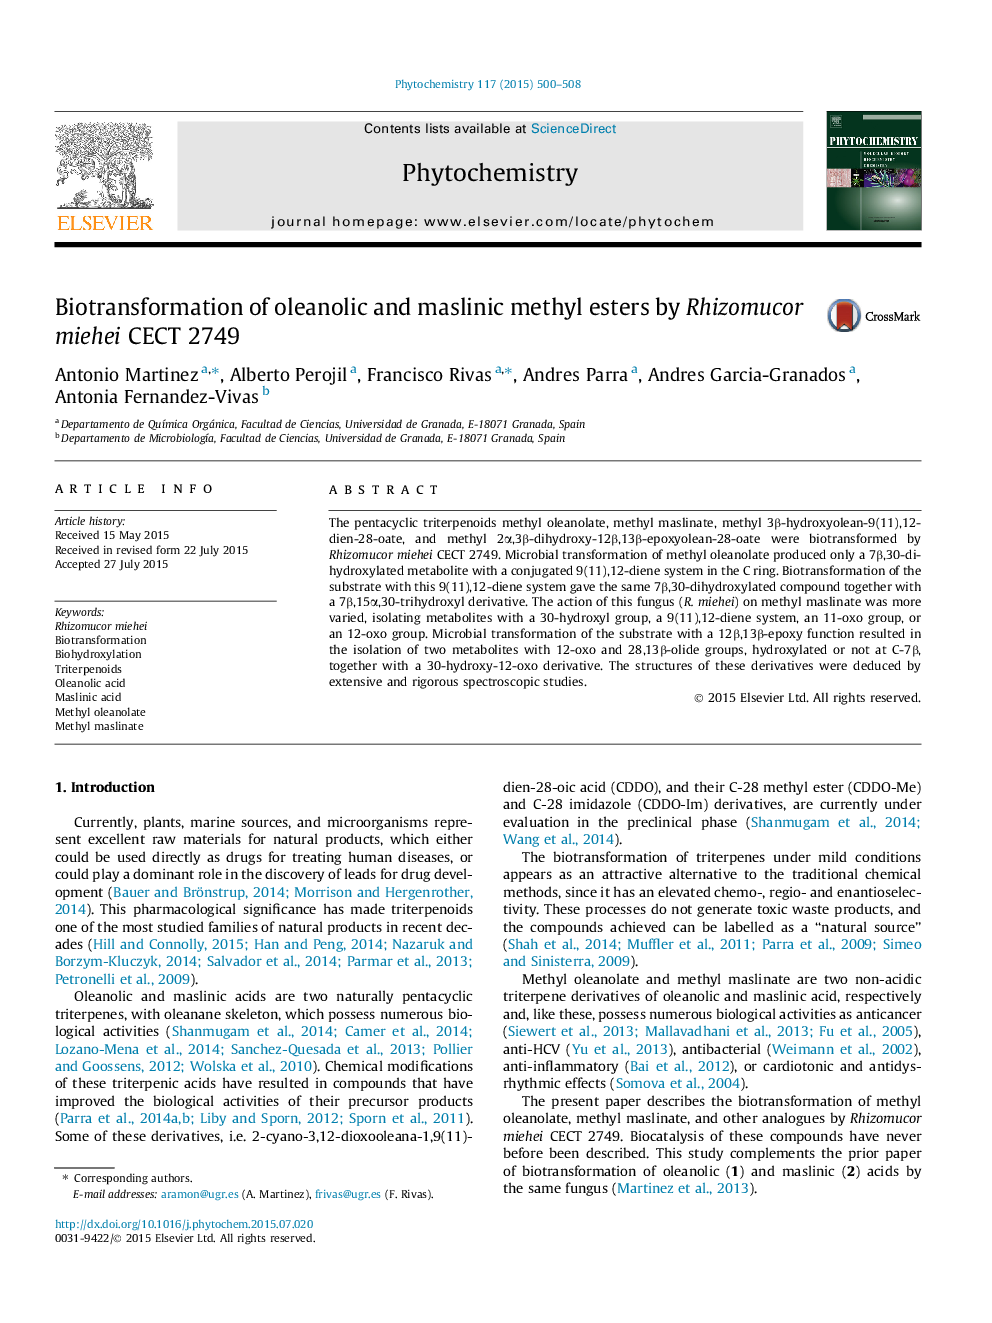 Biotransformation of oleanolic and maslinic methyl esters by Rhizomucor miehei CECT 2749